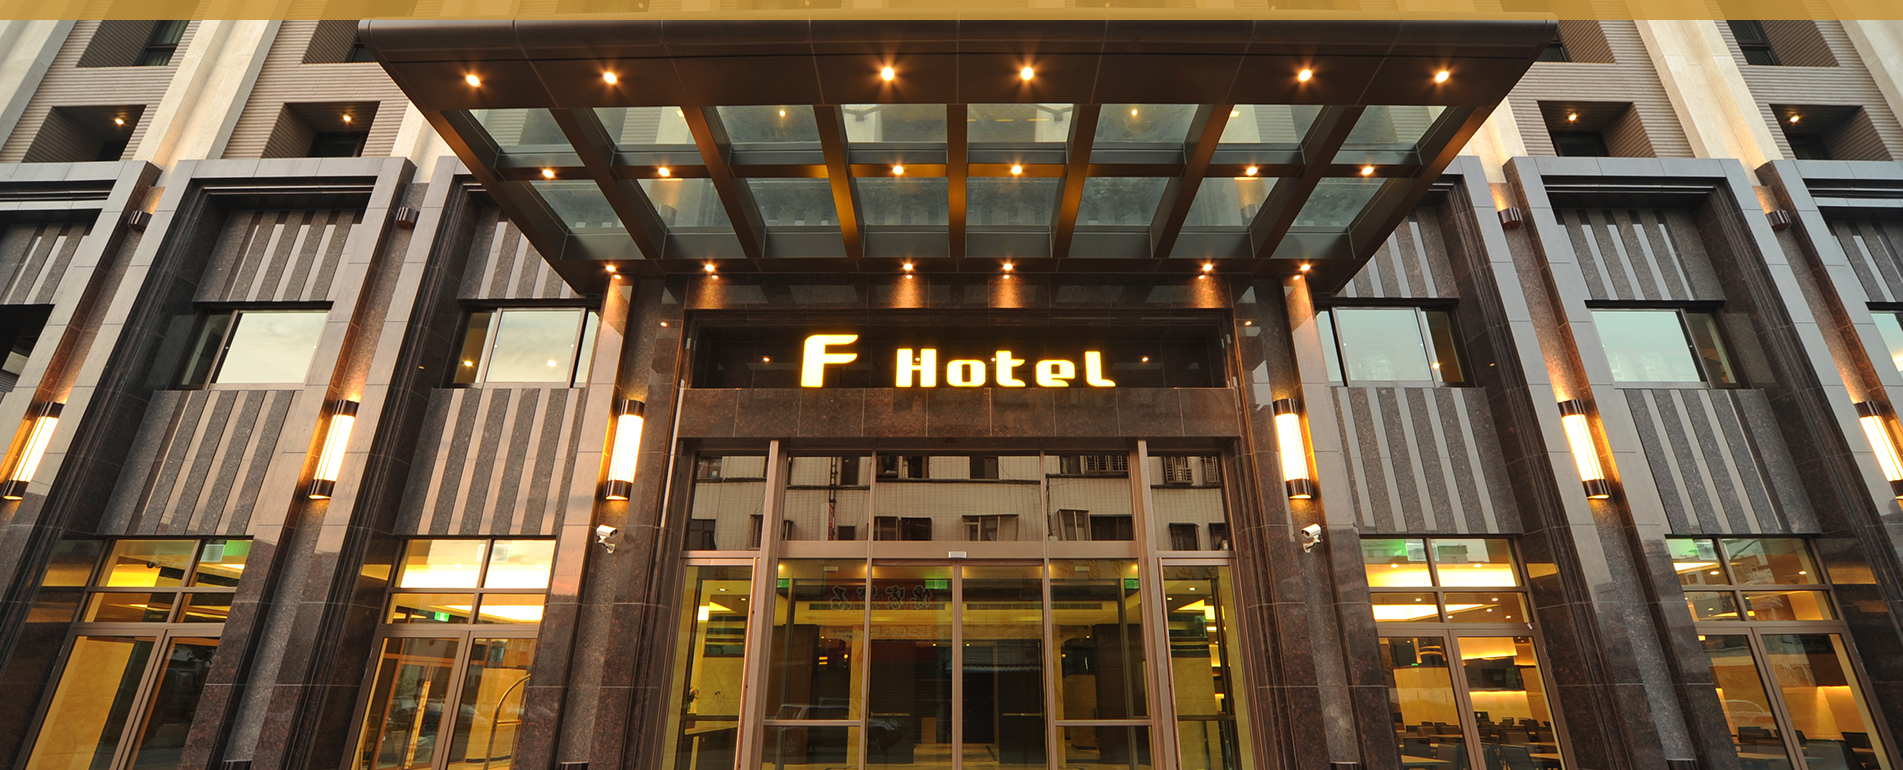 Hotel Valletta,中天溫泉度假飯店,台灣旅遊,宜蘭旅遊,礁溪溫泉,礁溪溫泉飯店 @傑菲亞娃JEFFIA FANG